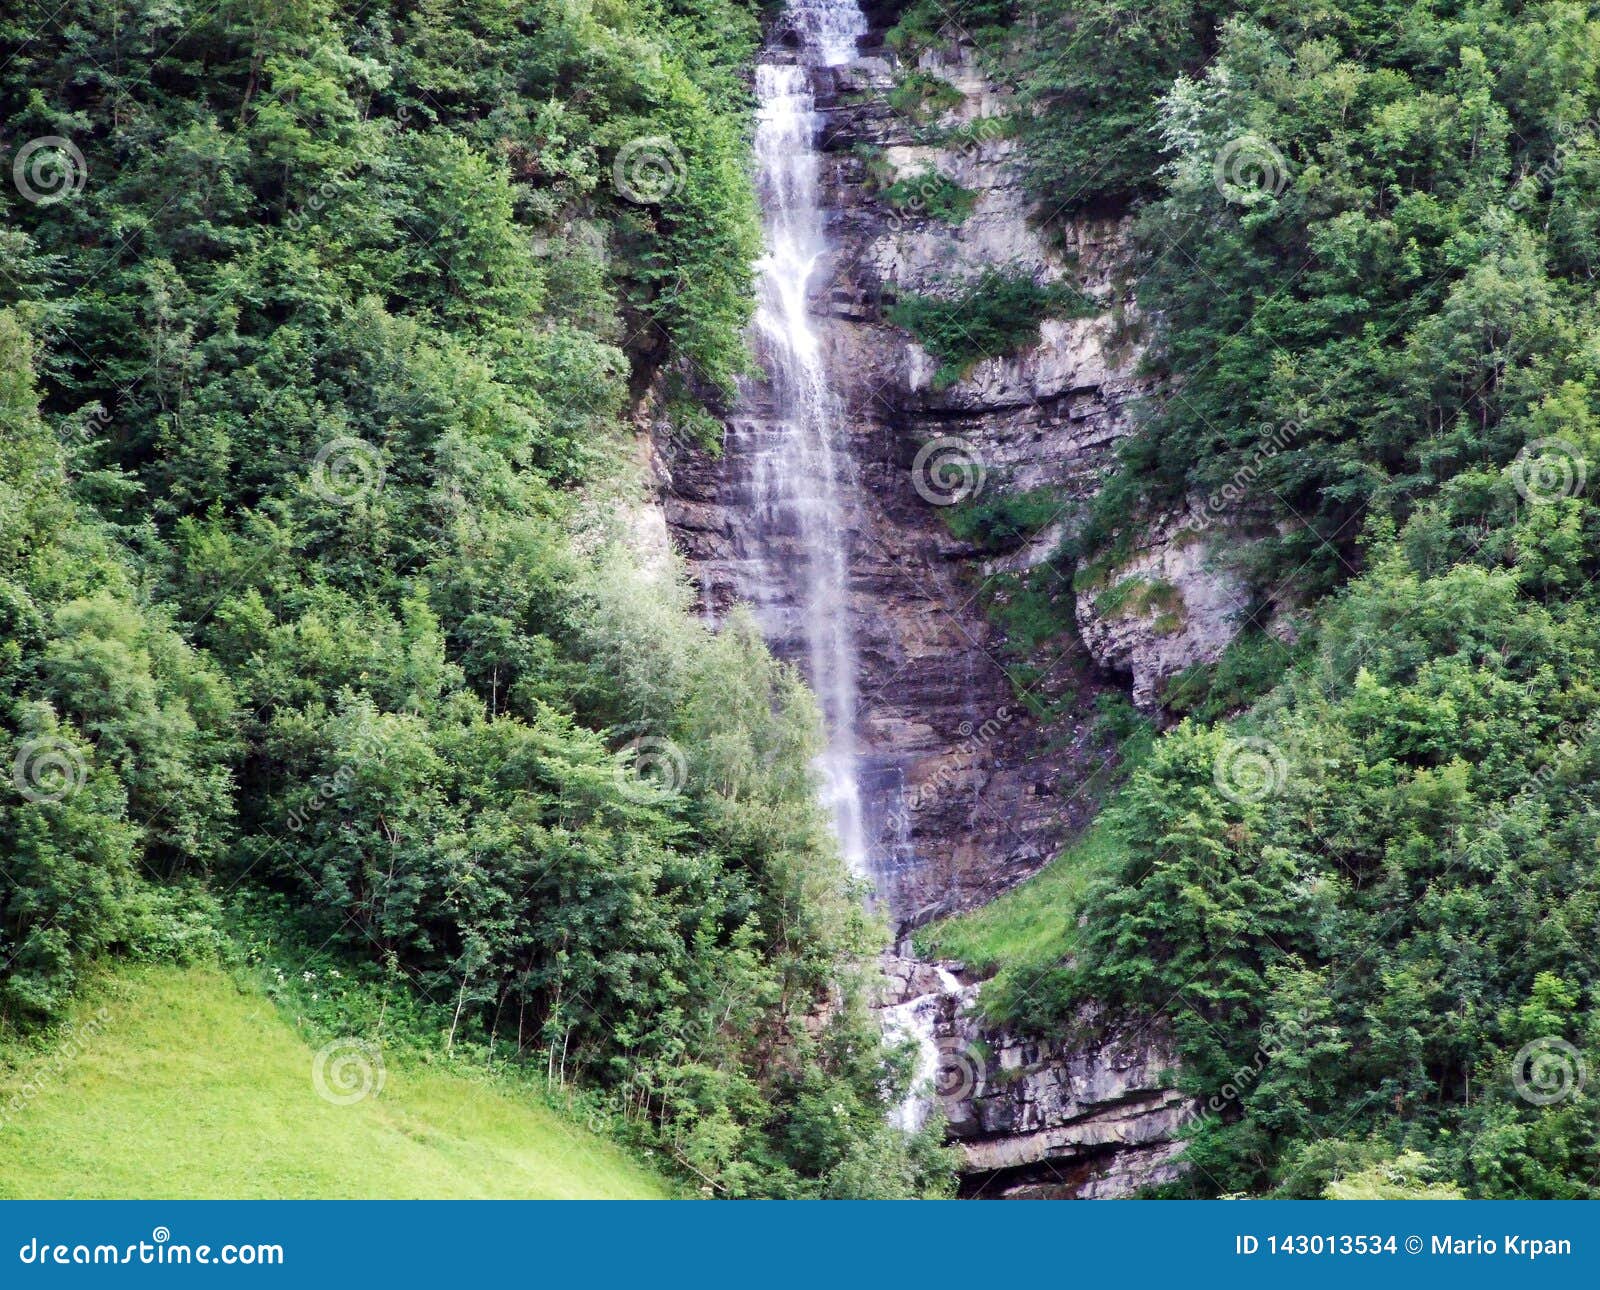 waterfall laubenfall in the sernftal alpine valley or wasserfÃÂ¤lle laubenfÃÂ¤lle